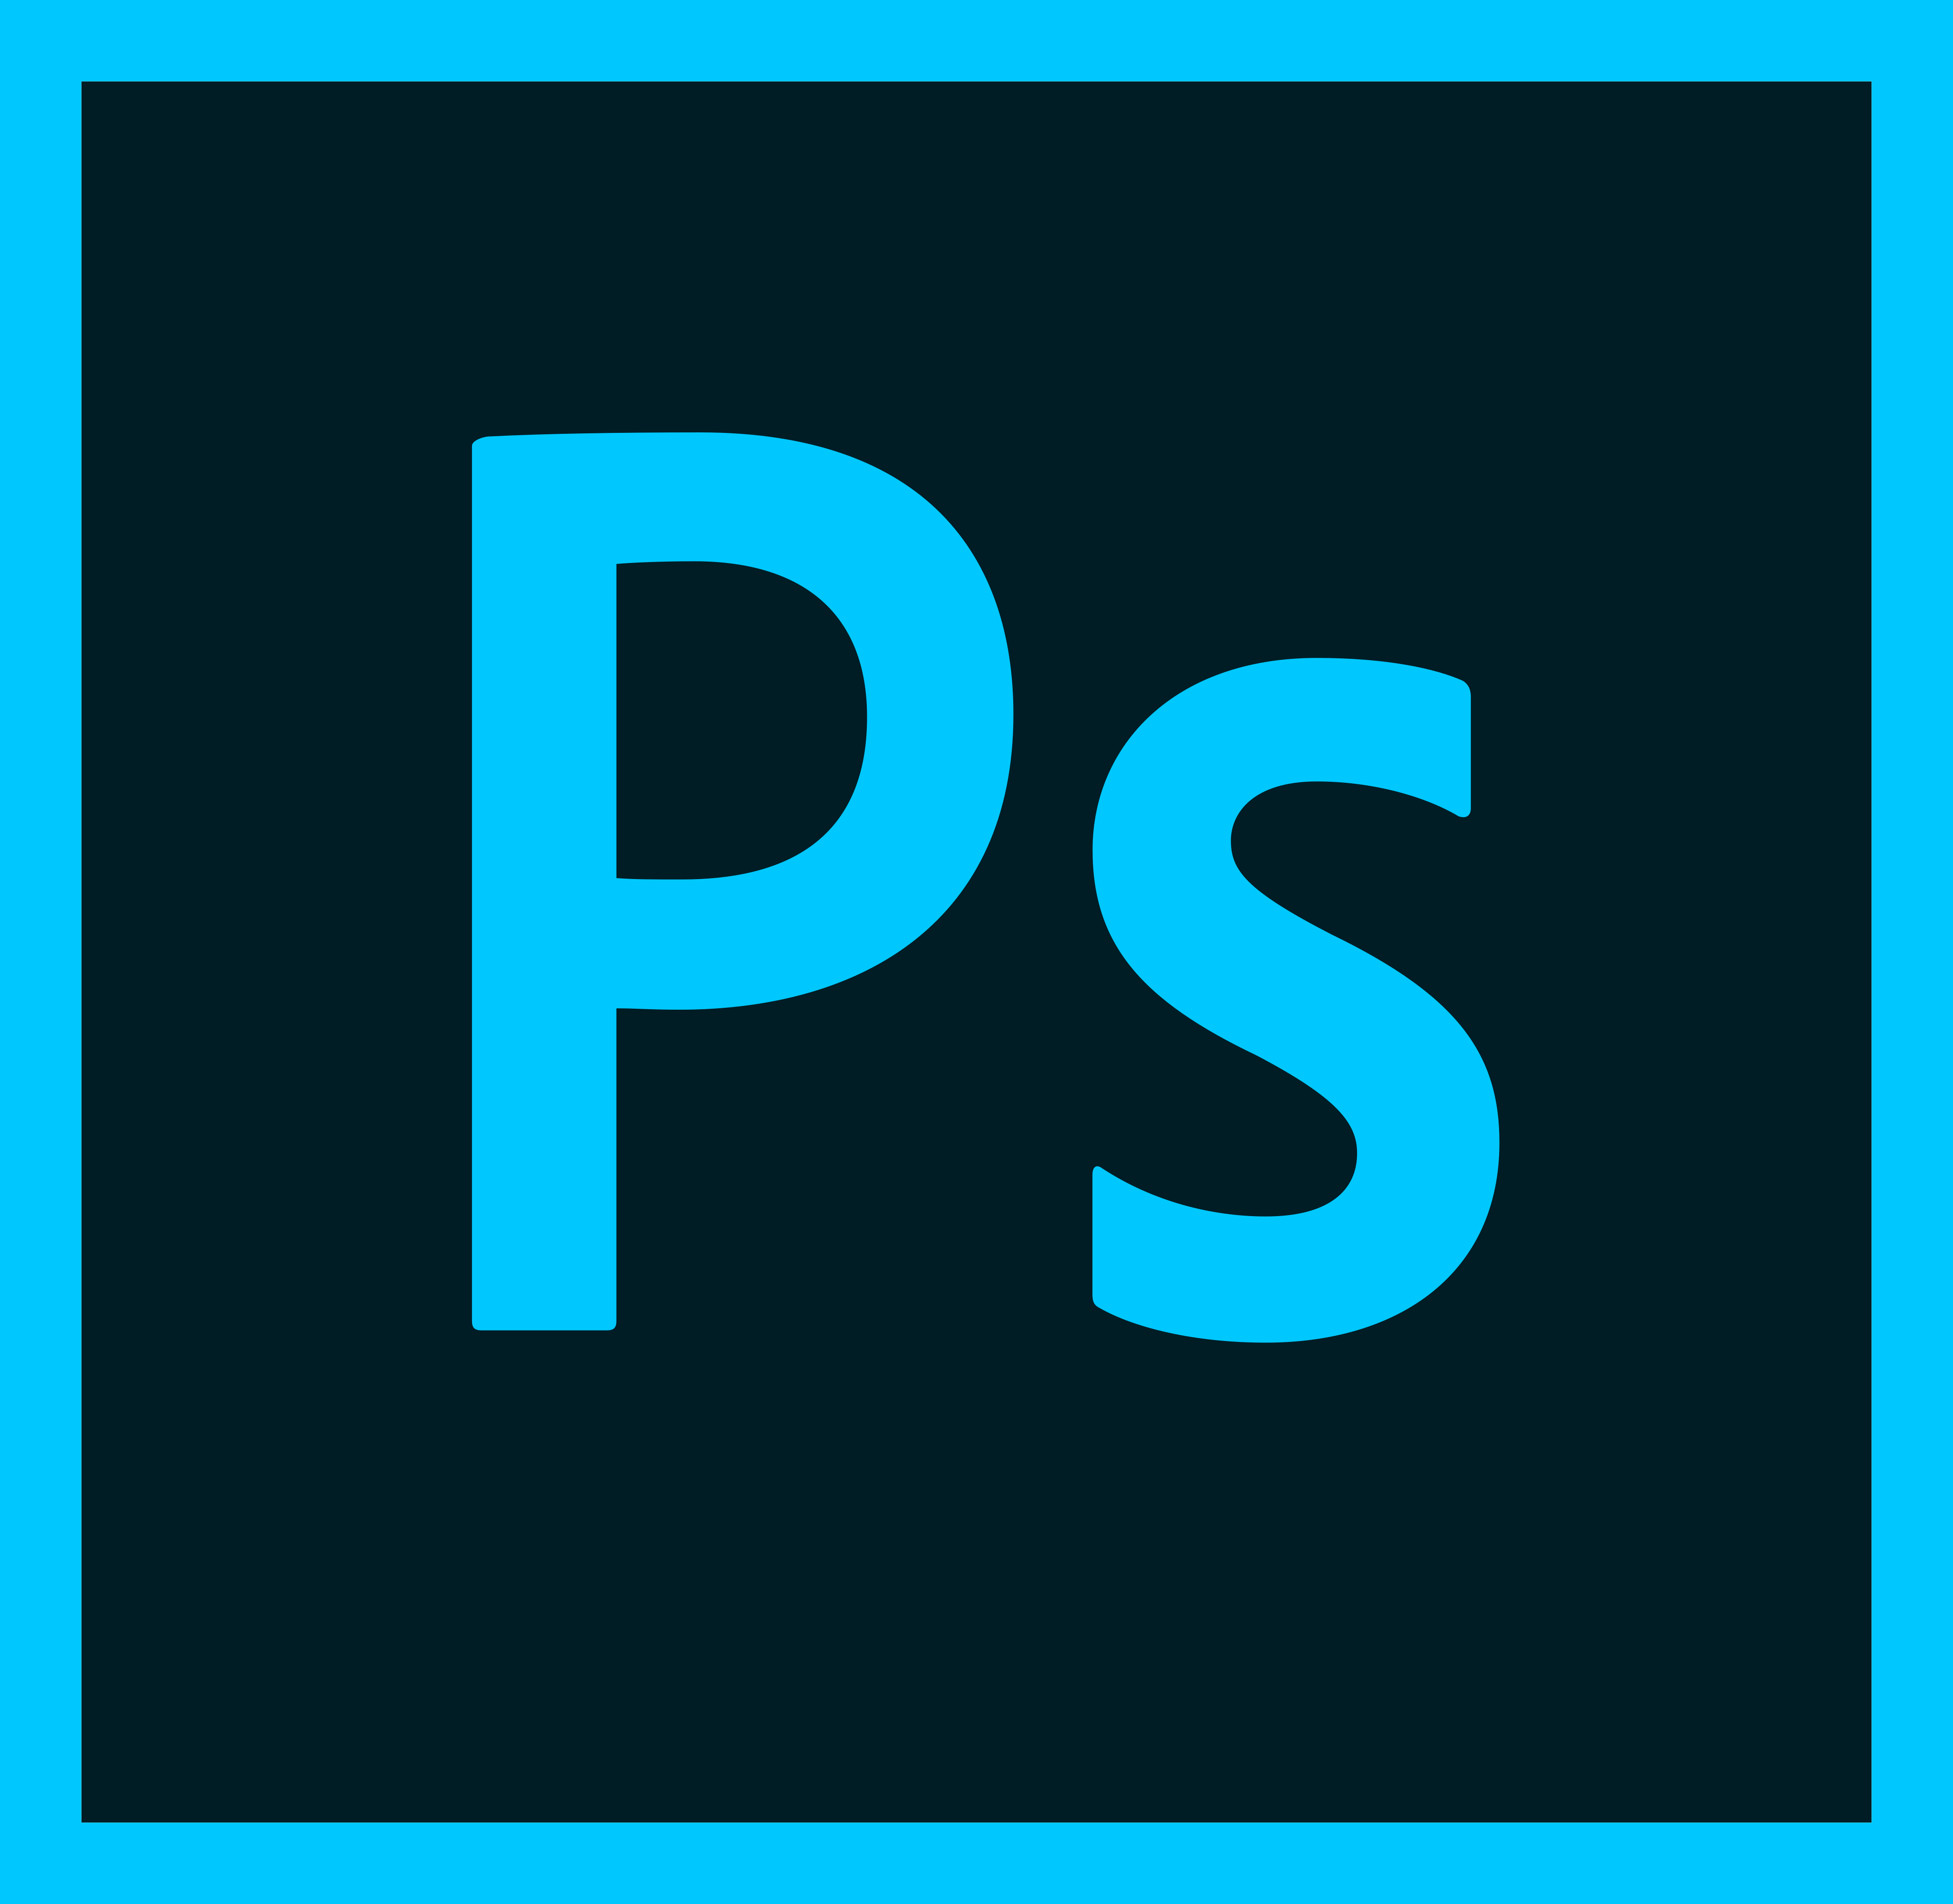 Adobe Photoshop logo failed to load